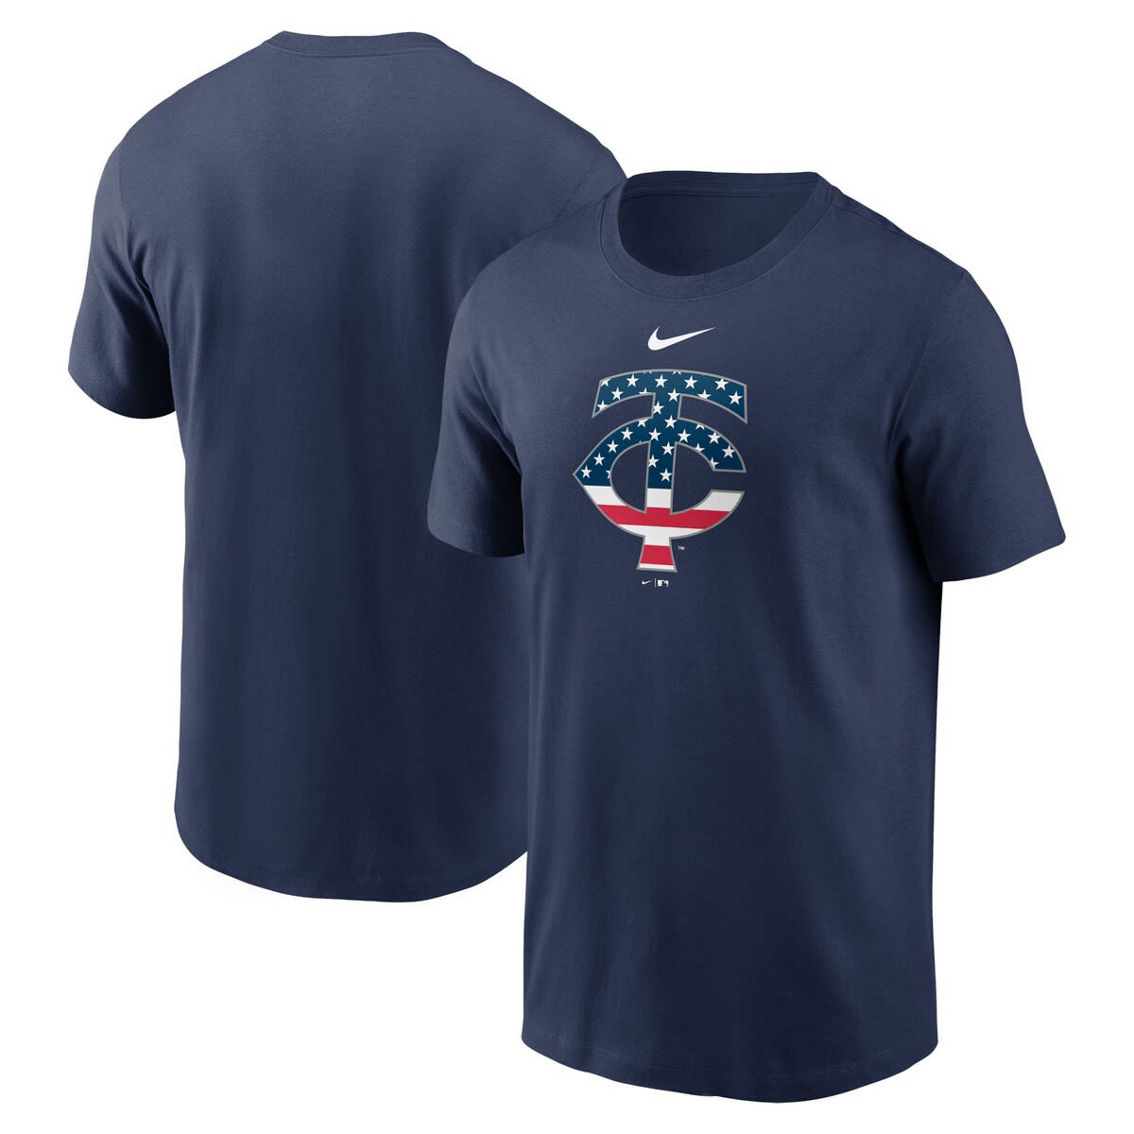 Nike Men's Navy Minnesota Twins Americana T-Shirt - Image 2 of 4